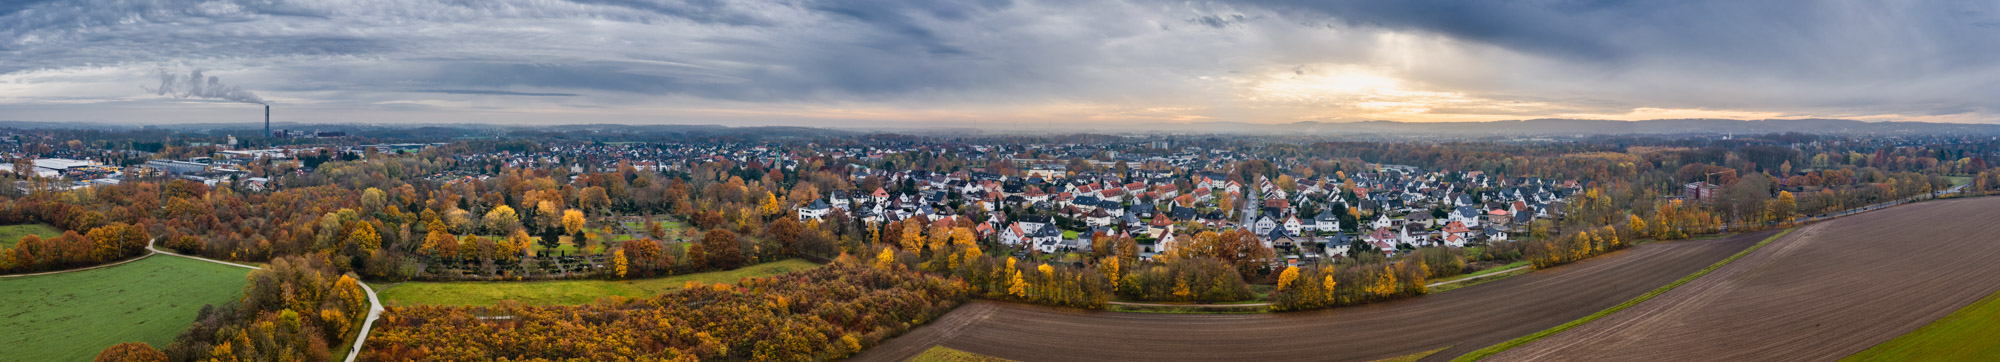 Bielefeld district Heepen in November 2019 (Germany).